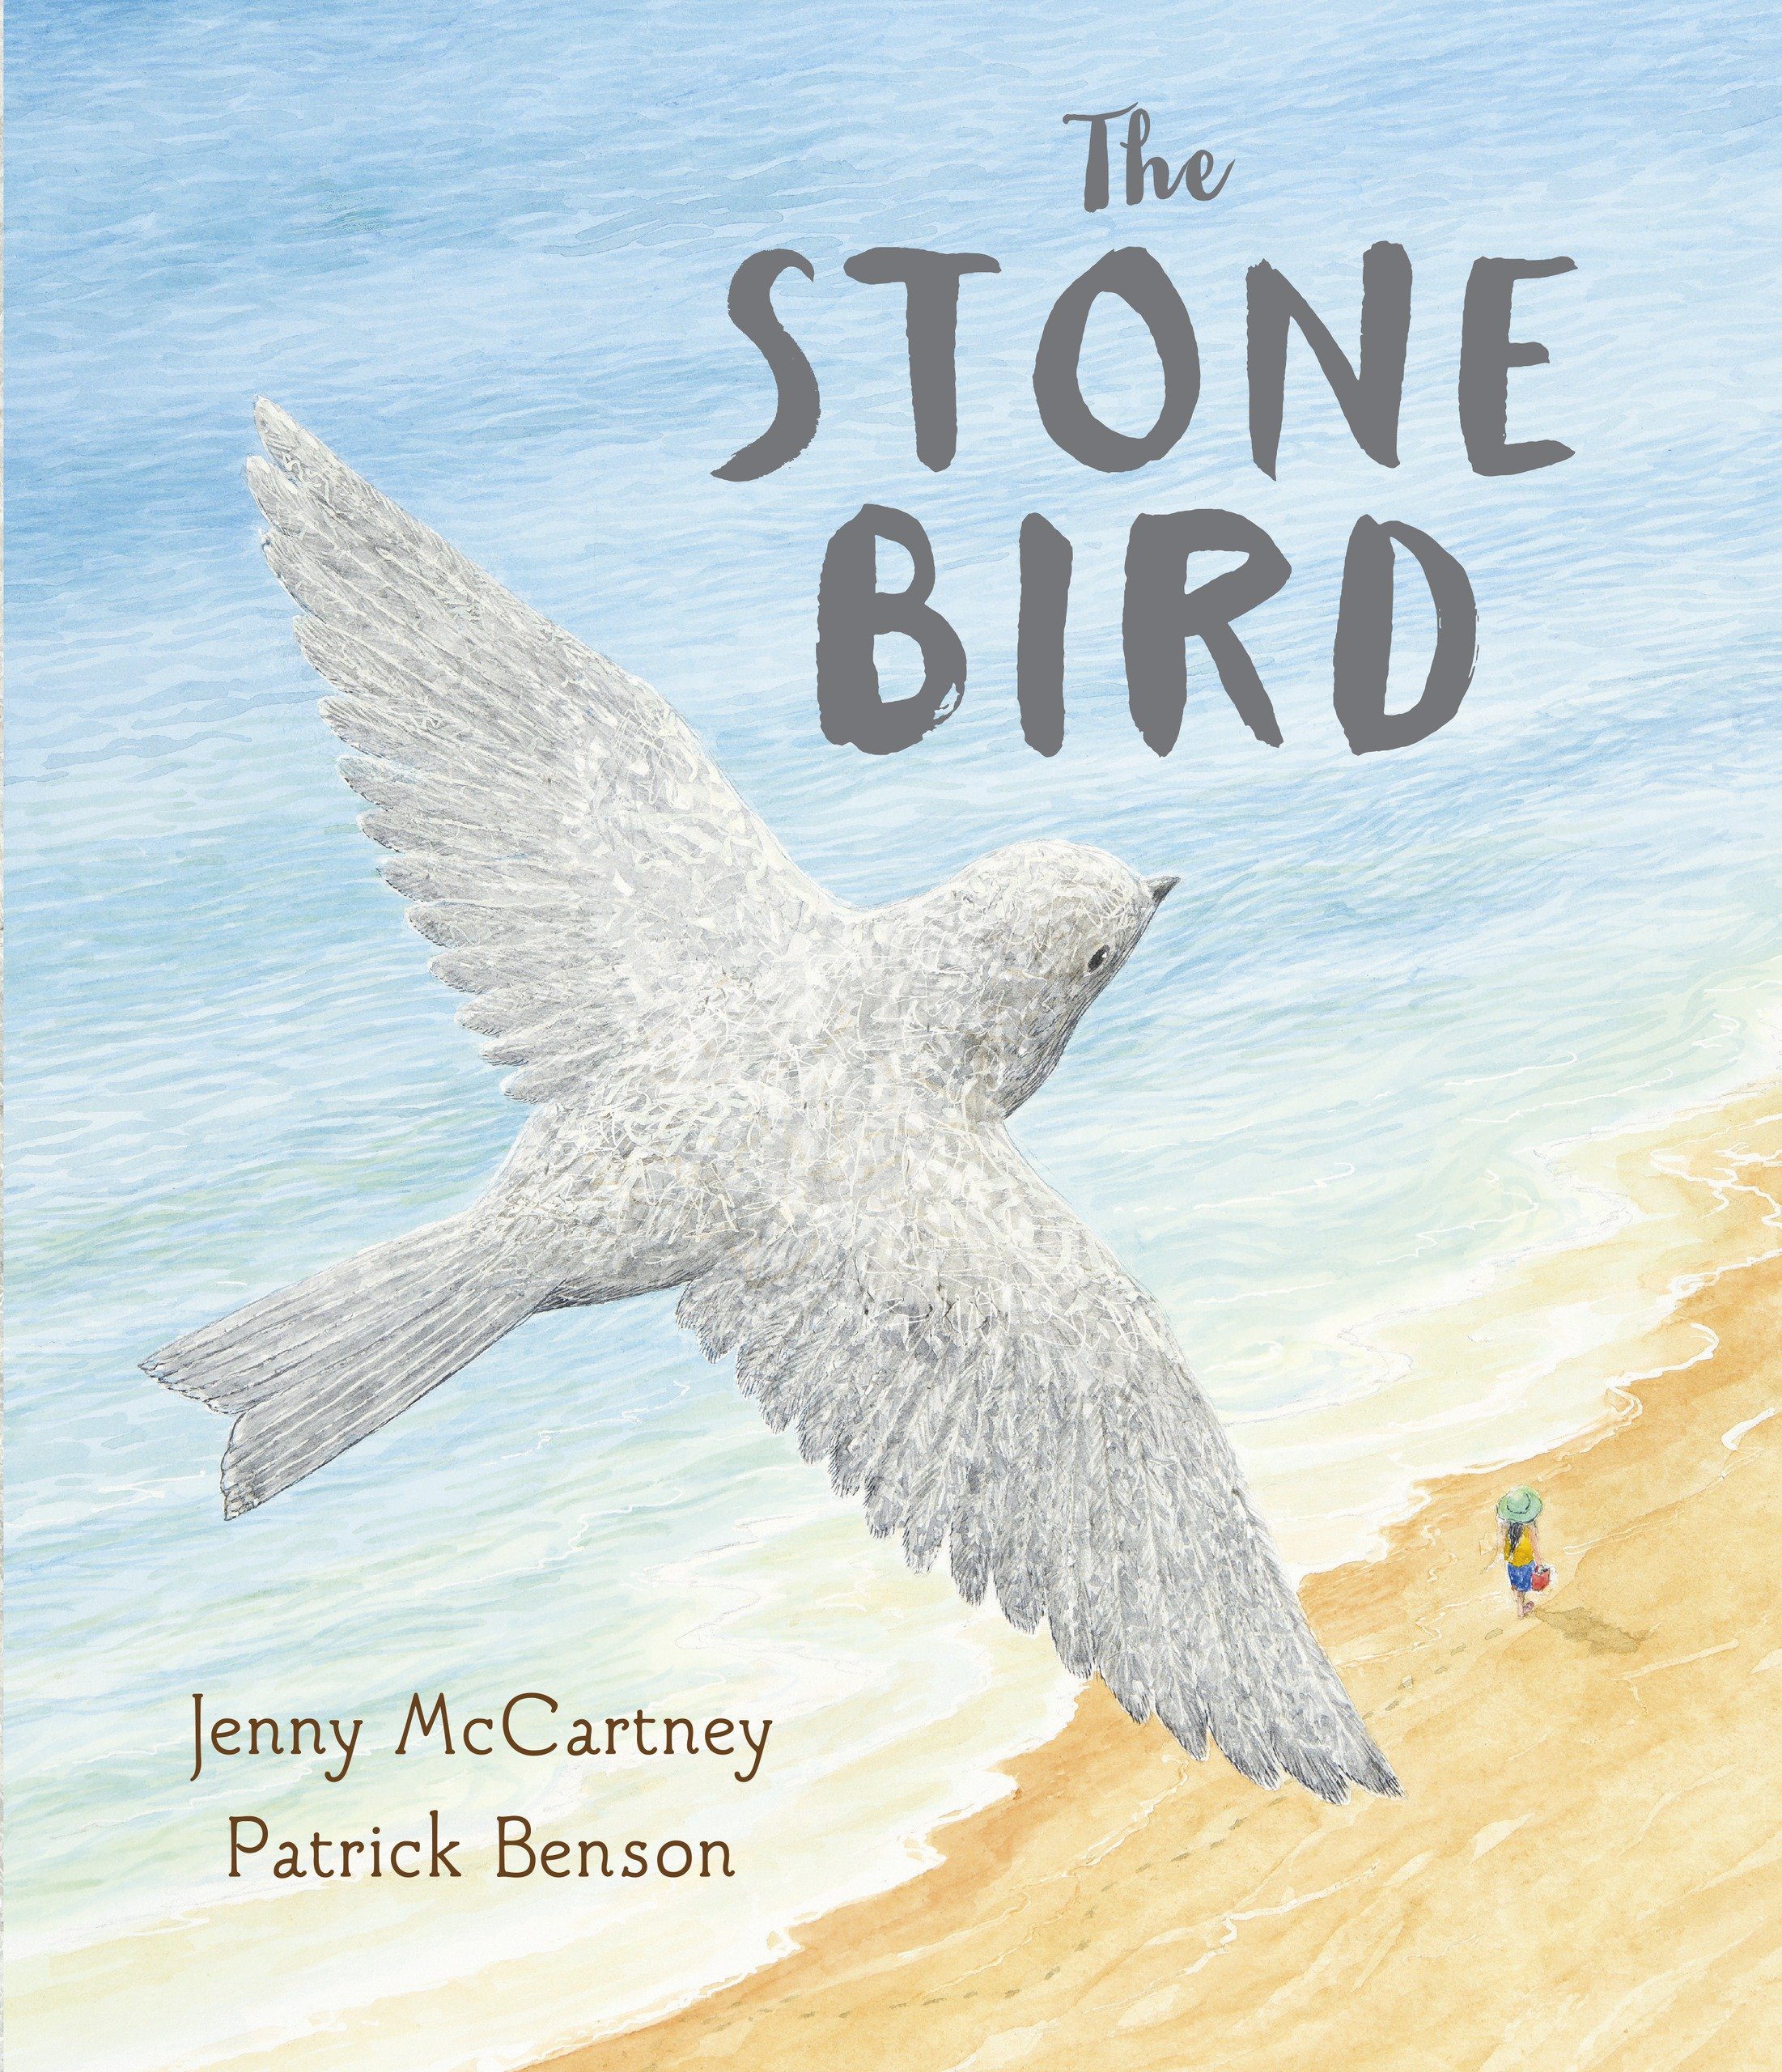 Stone birds. Патрик Бенсон. Stone Bird. Птичка Дженни Артеги. Birdstone Википедия.